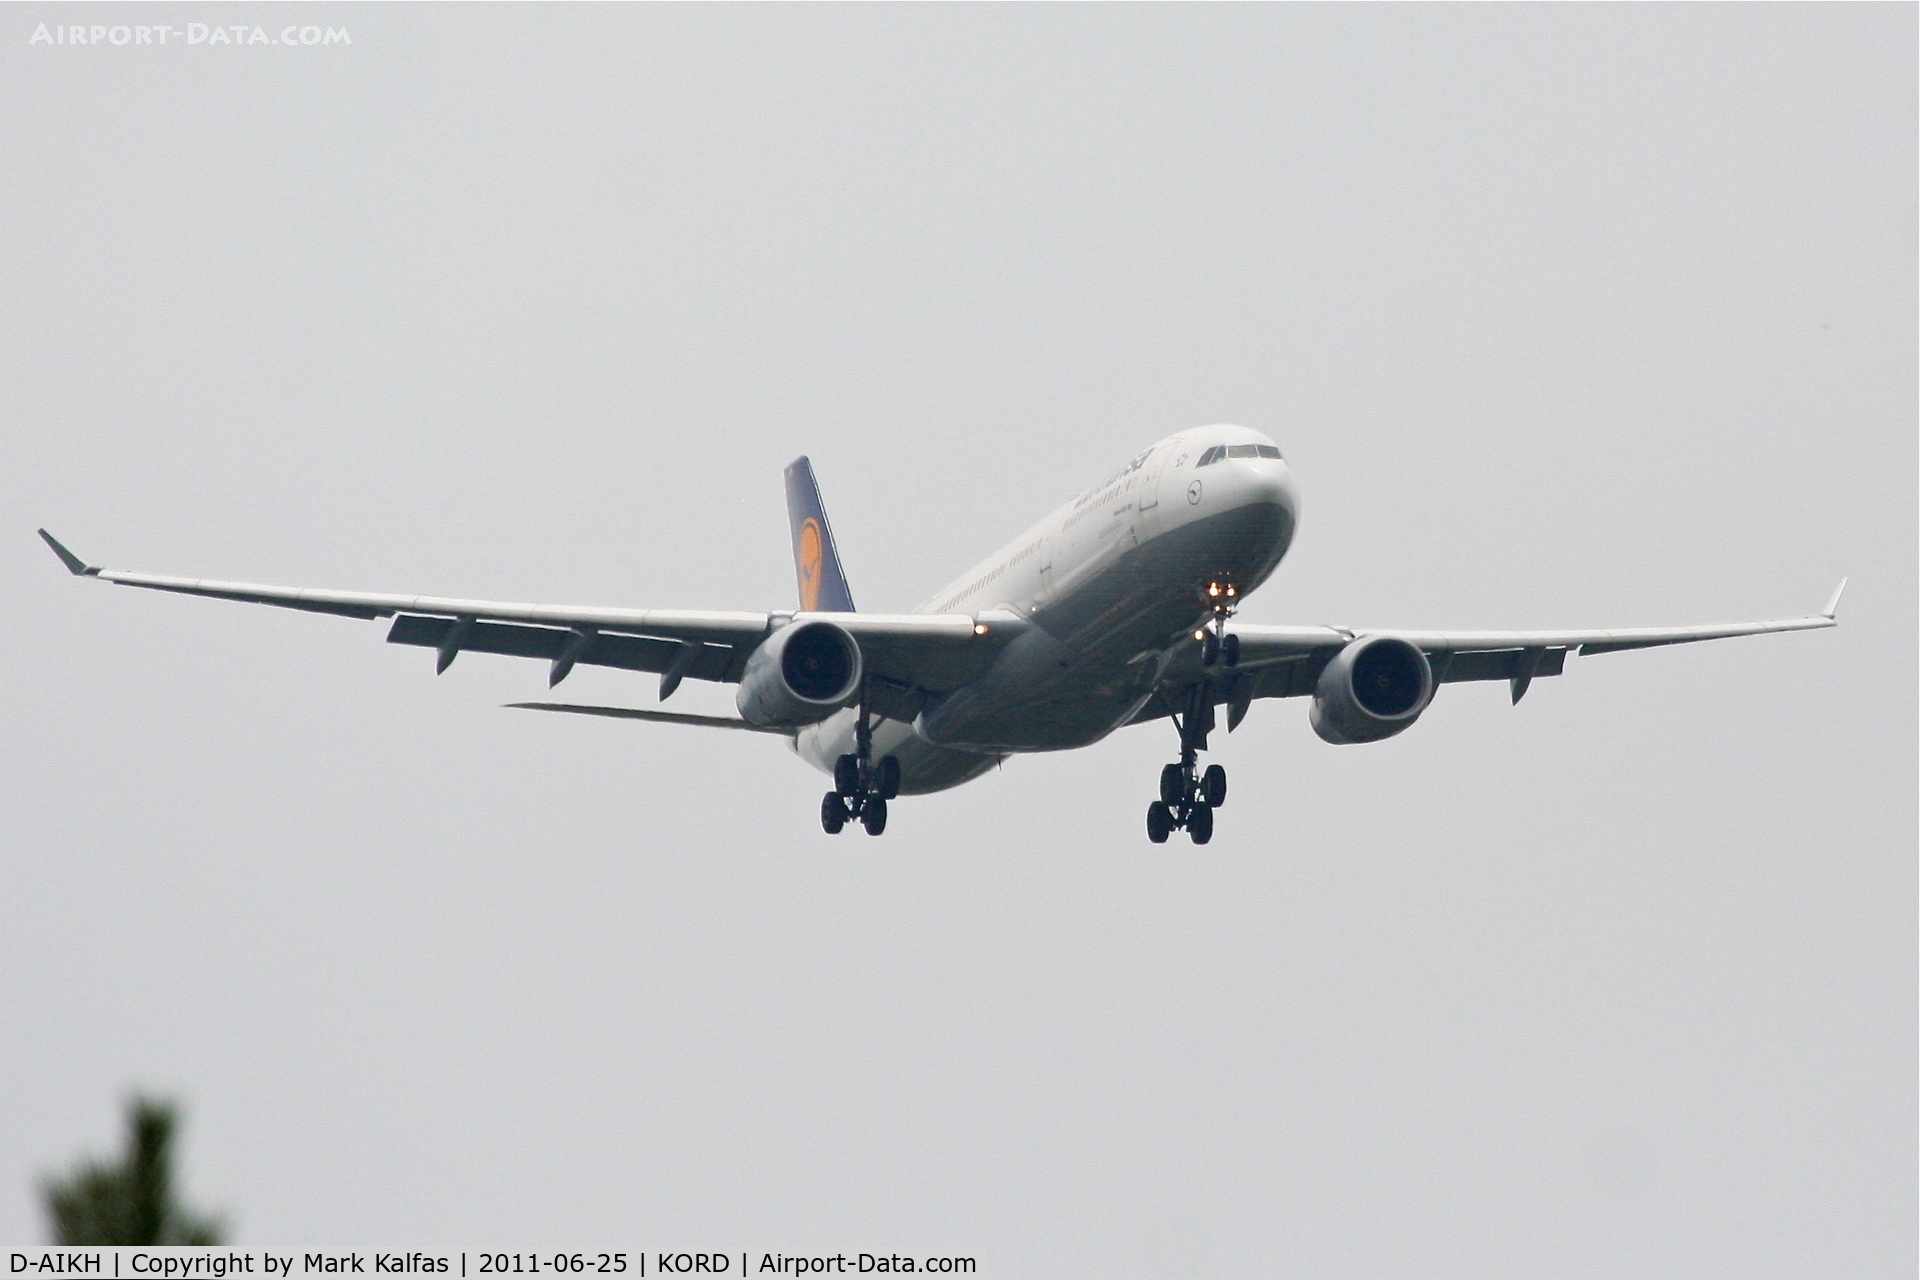 D-AIKH, 2005 Airbus A330-343X C/N 648, Lufthansa Airbus A330-343X, DLH436 arriving from EDDL/Dusseldorf, RWY 10 approach KORD.